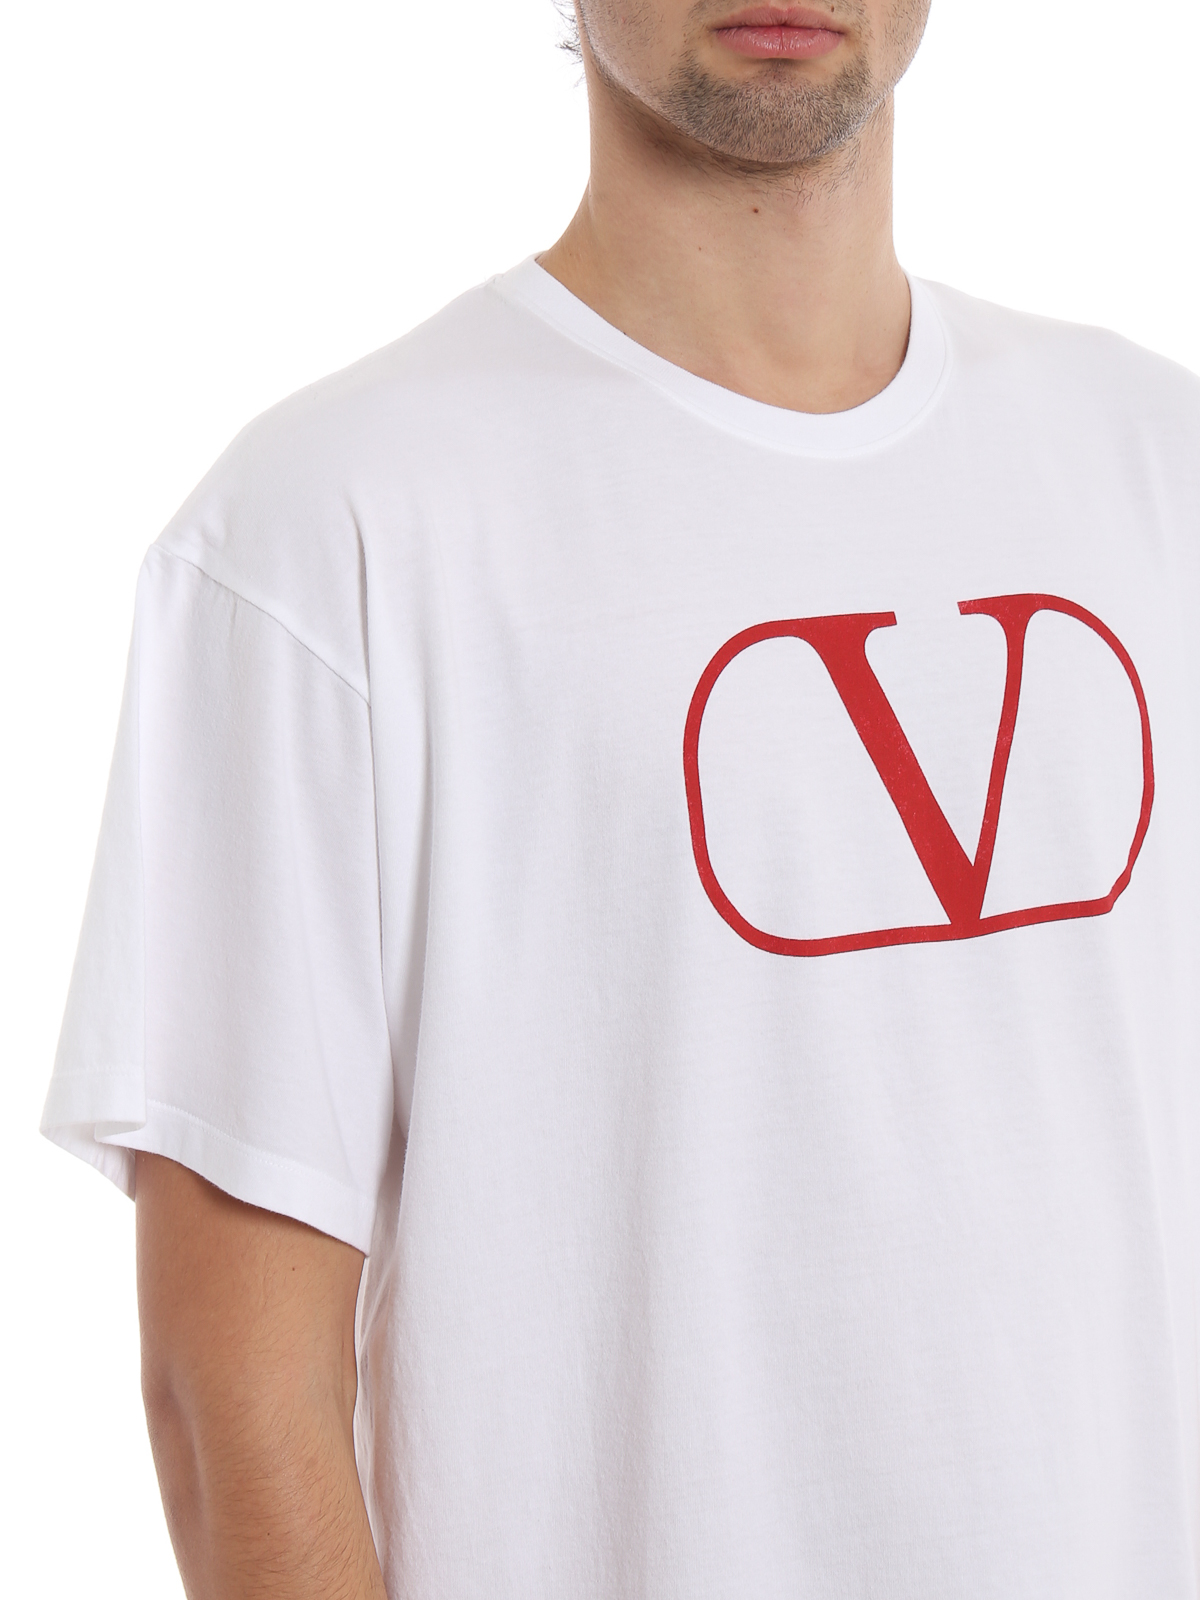 Valentino Logo T Shirt on Sale, SAVE 58%.